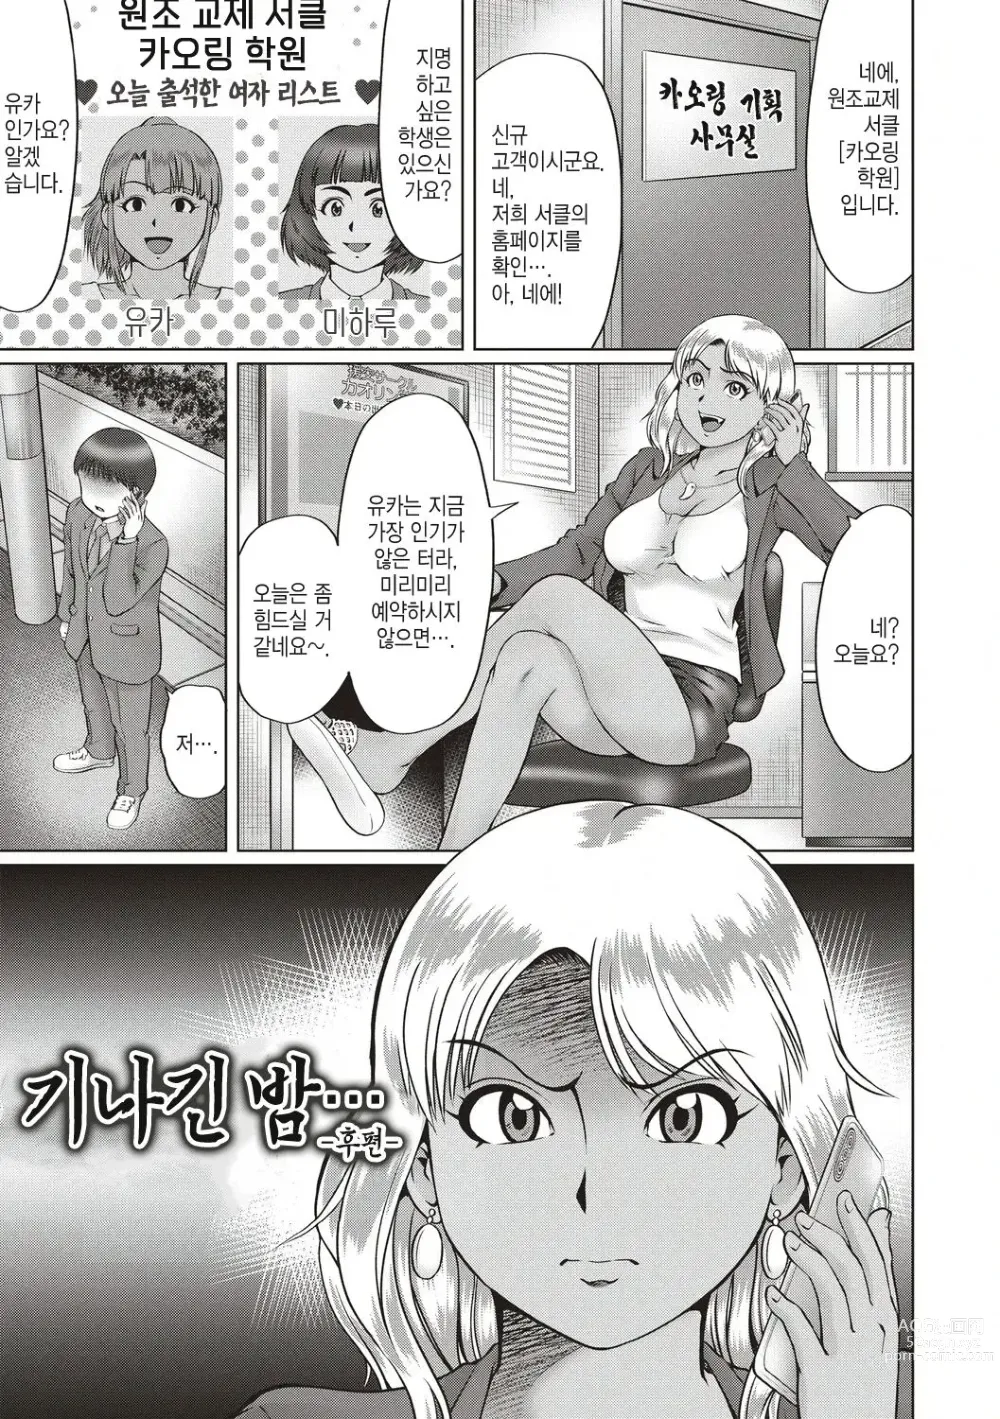 Page 1 of manga 기나긴 밤... -후편-